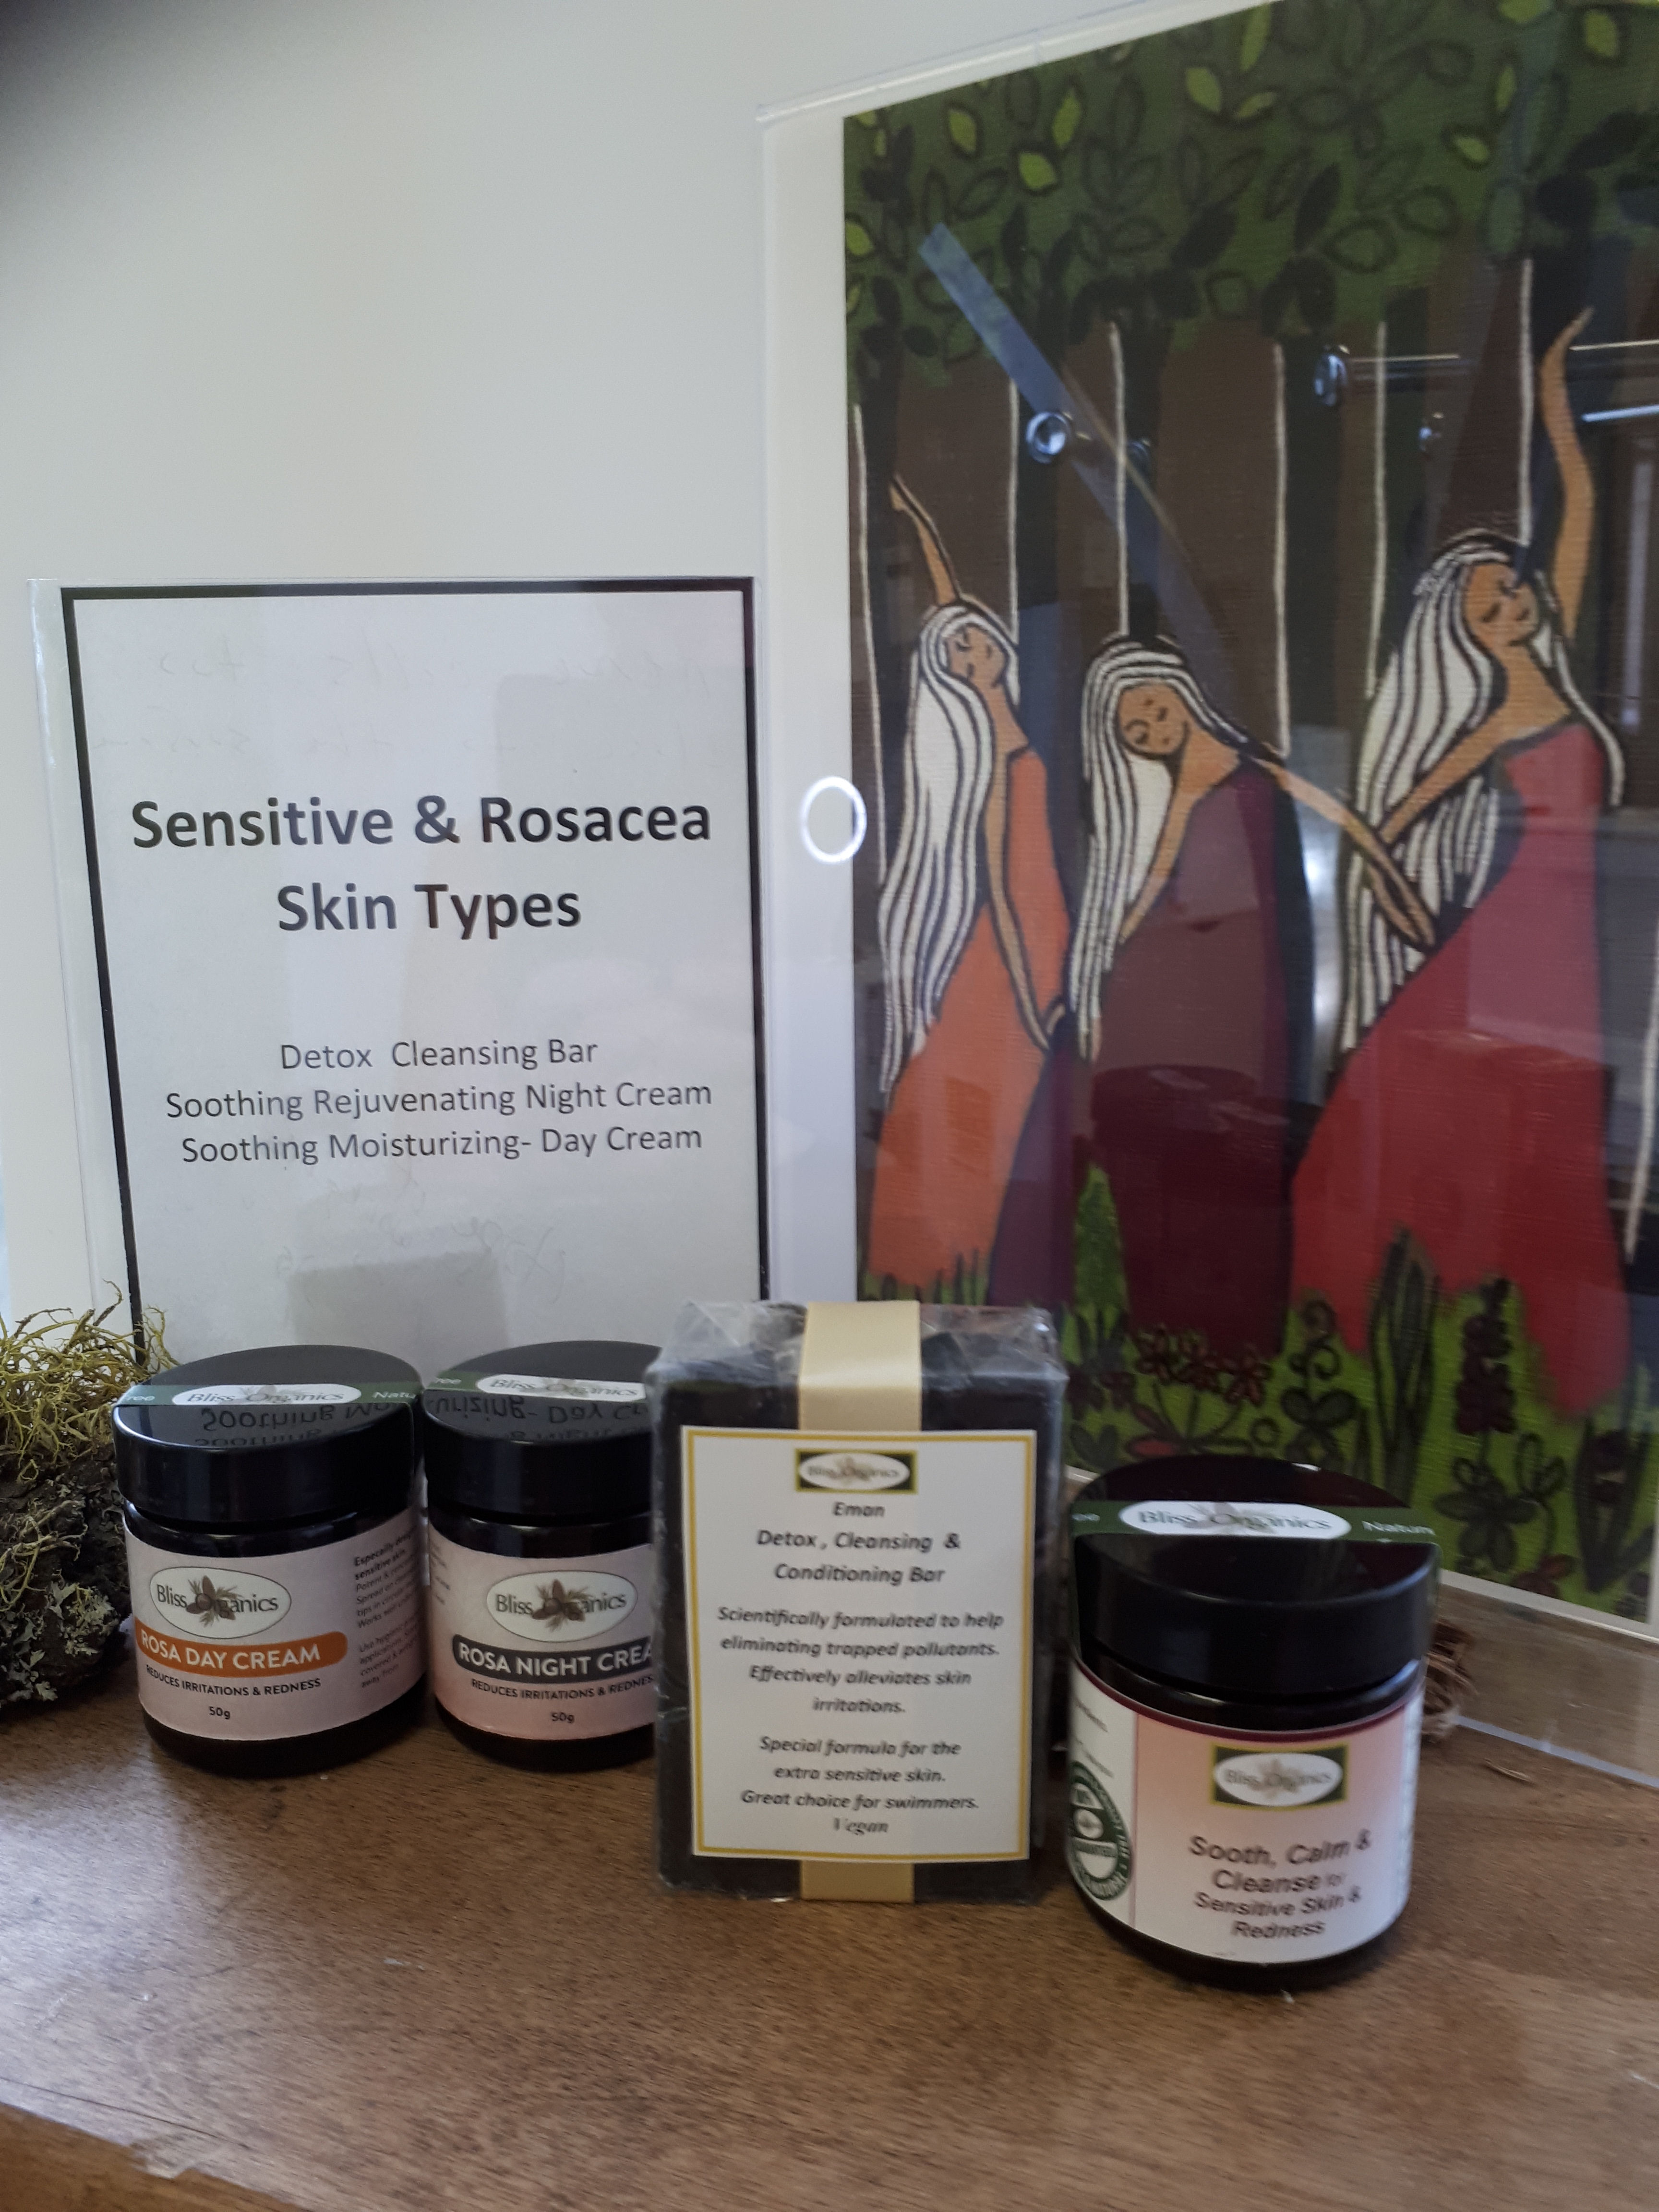 Sensitive & Rosacea Skin Types